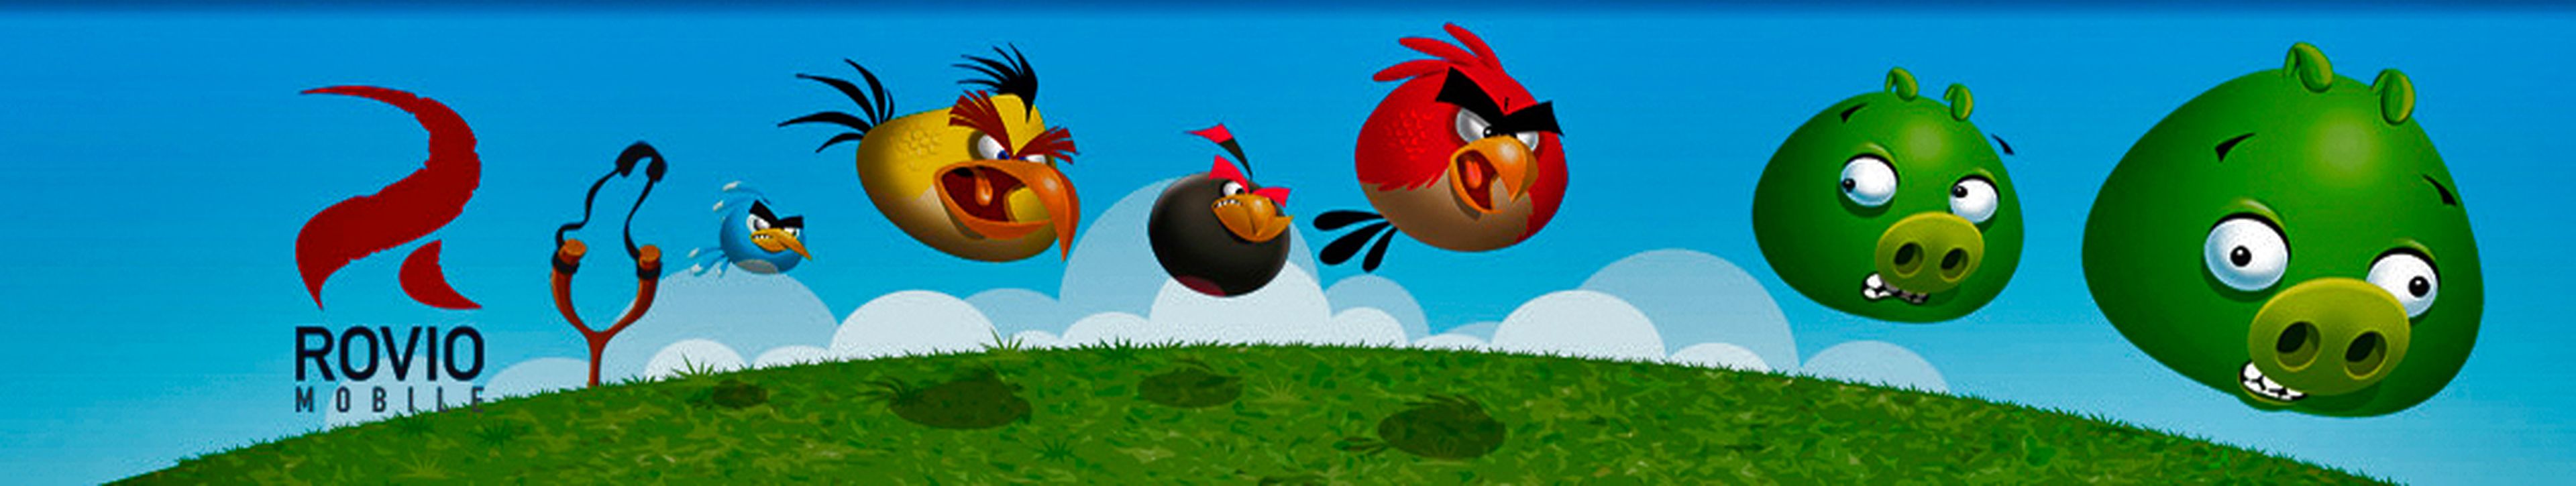 15 niveles más para Angry Birds